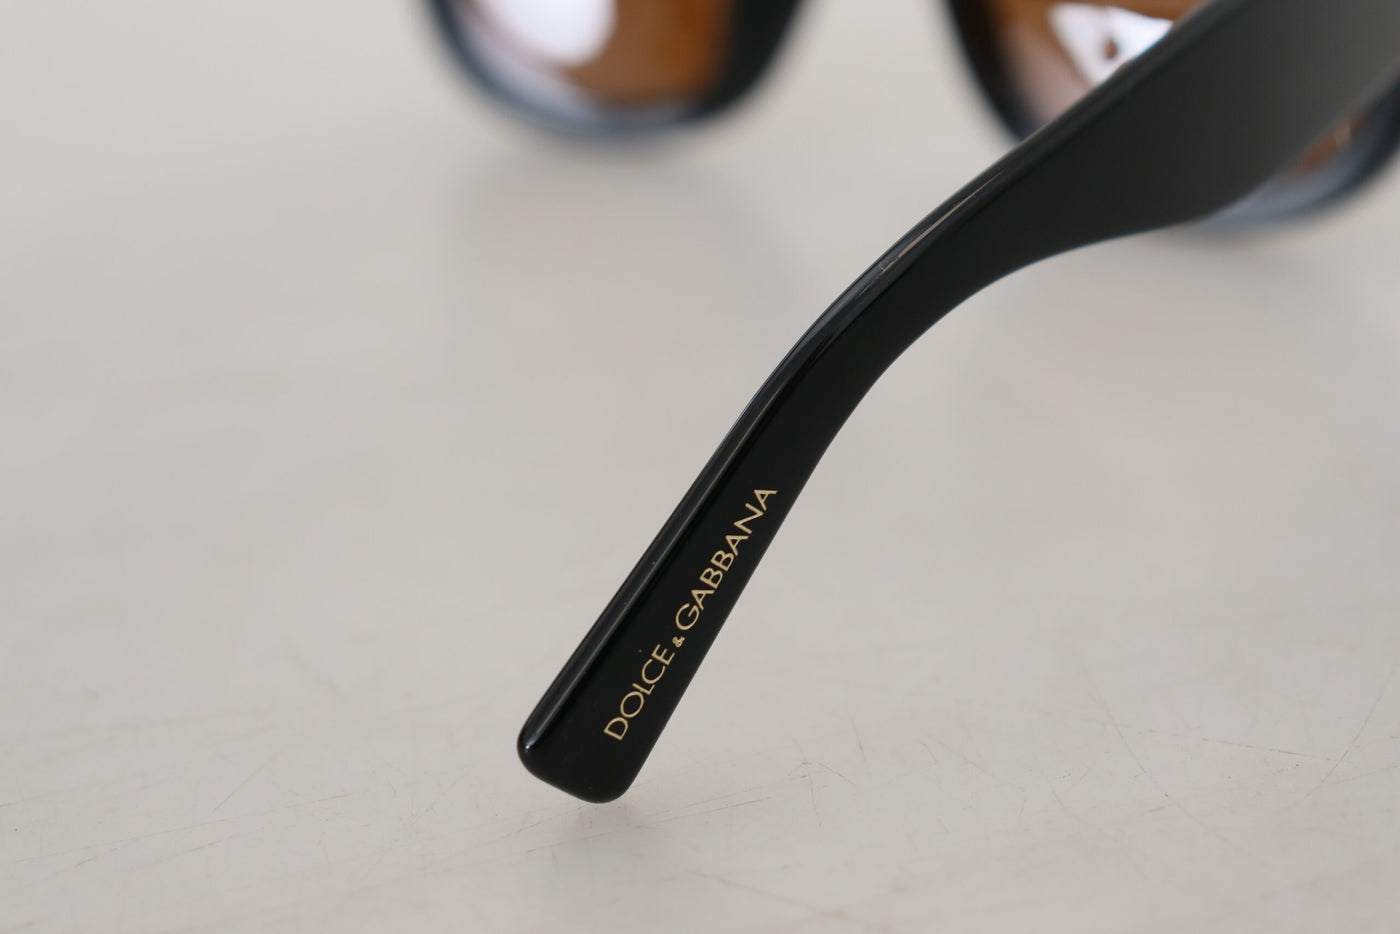 Dolce & Gabbana Brown DG4379-F Gradient Lenses Sunglasses